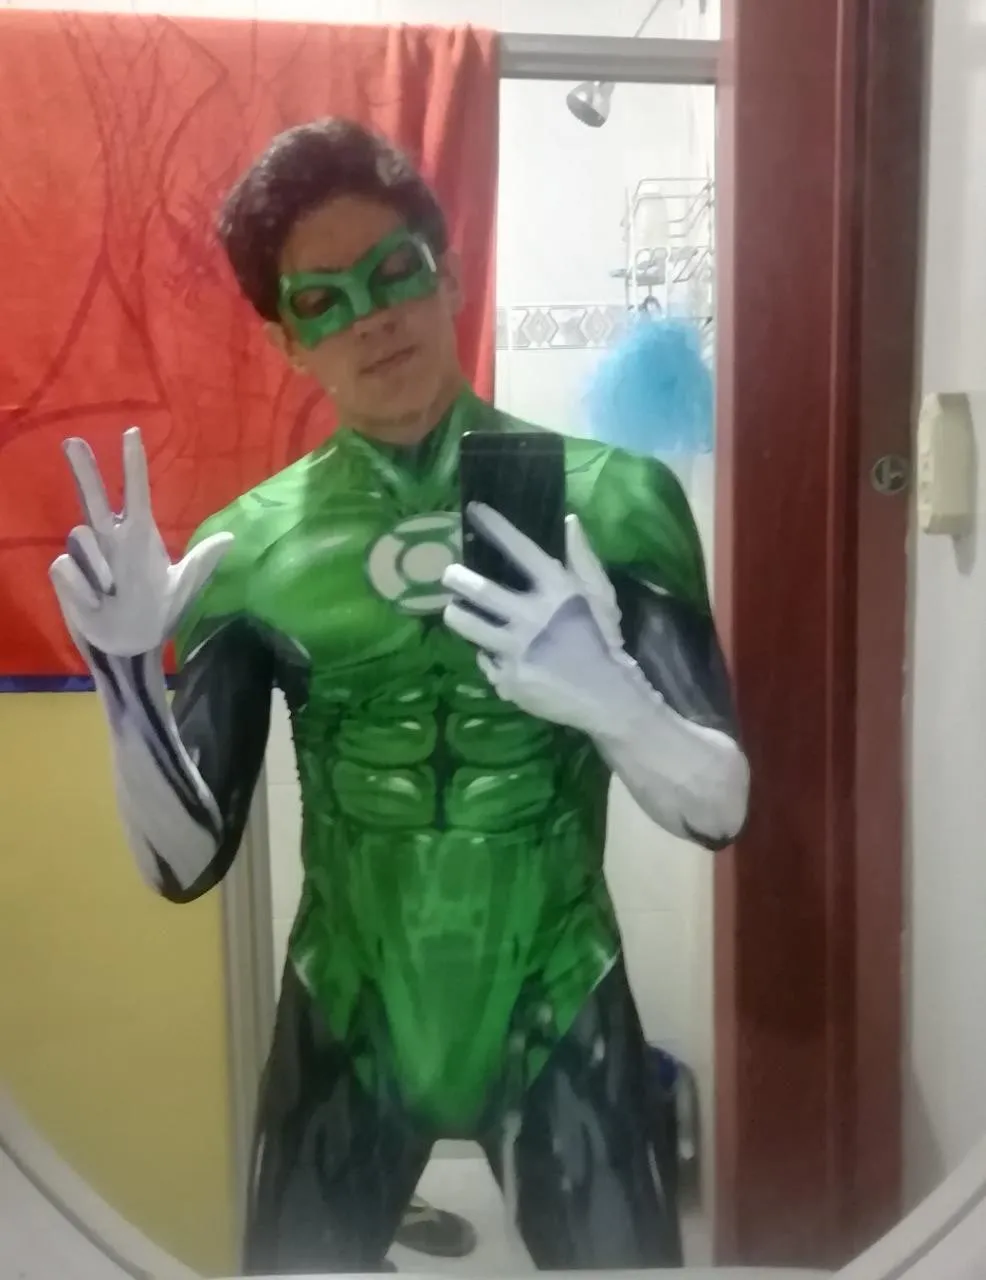 3D Printed Adults Kids Green Lantern Superhero Cosplay Costumes Zentai Halloween Party Bodysuit